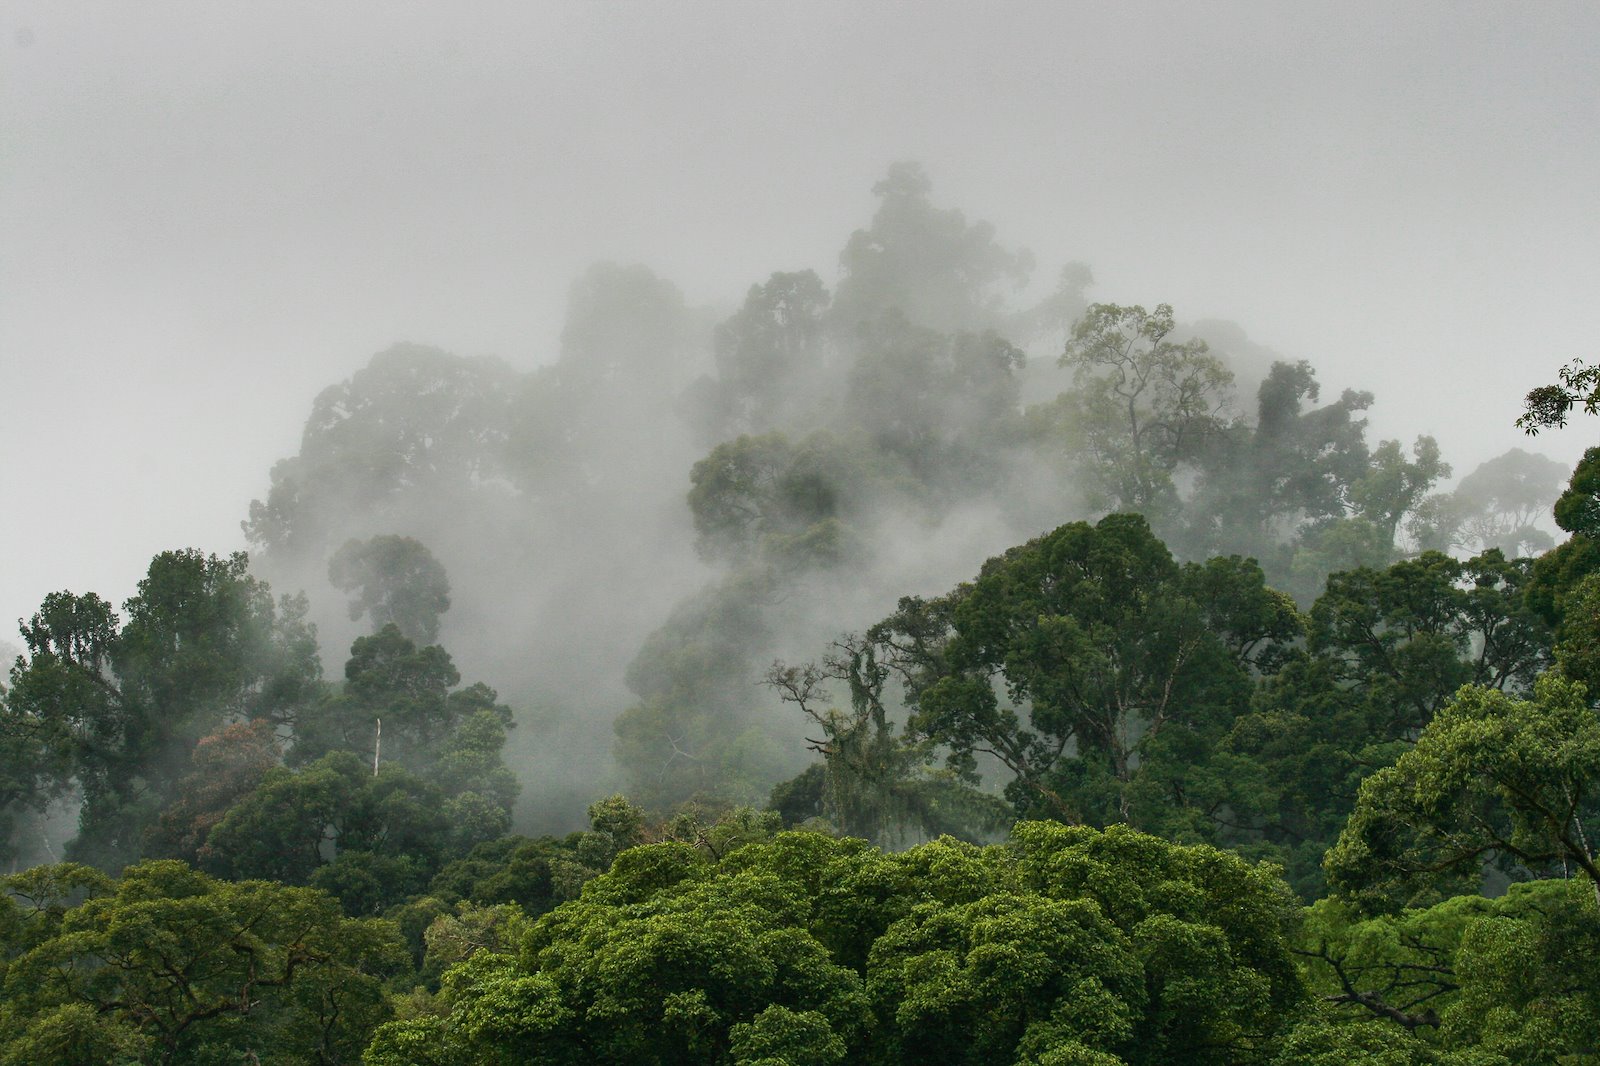 Primary forest, Danum valley, Borneo, Malaysia. Photo: Gregoire Dubois